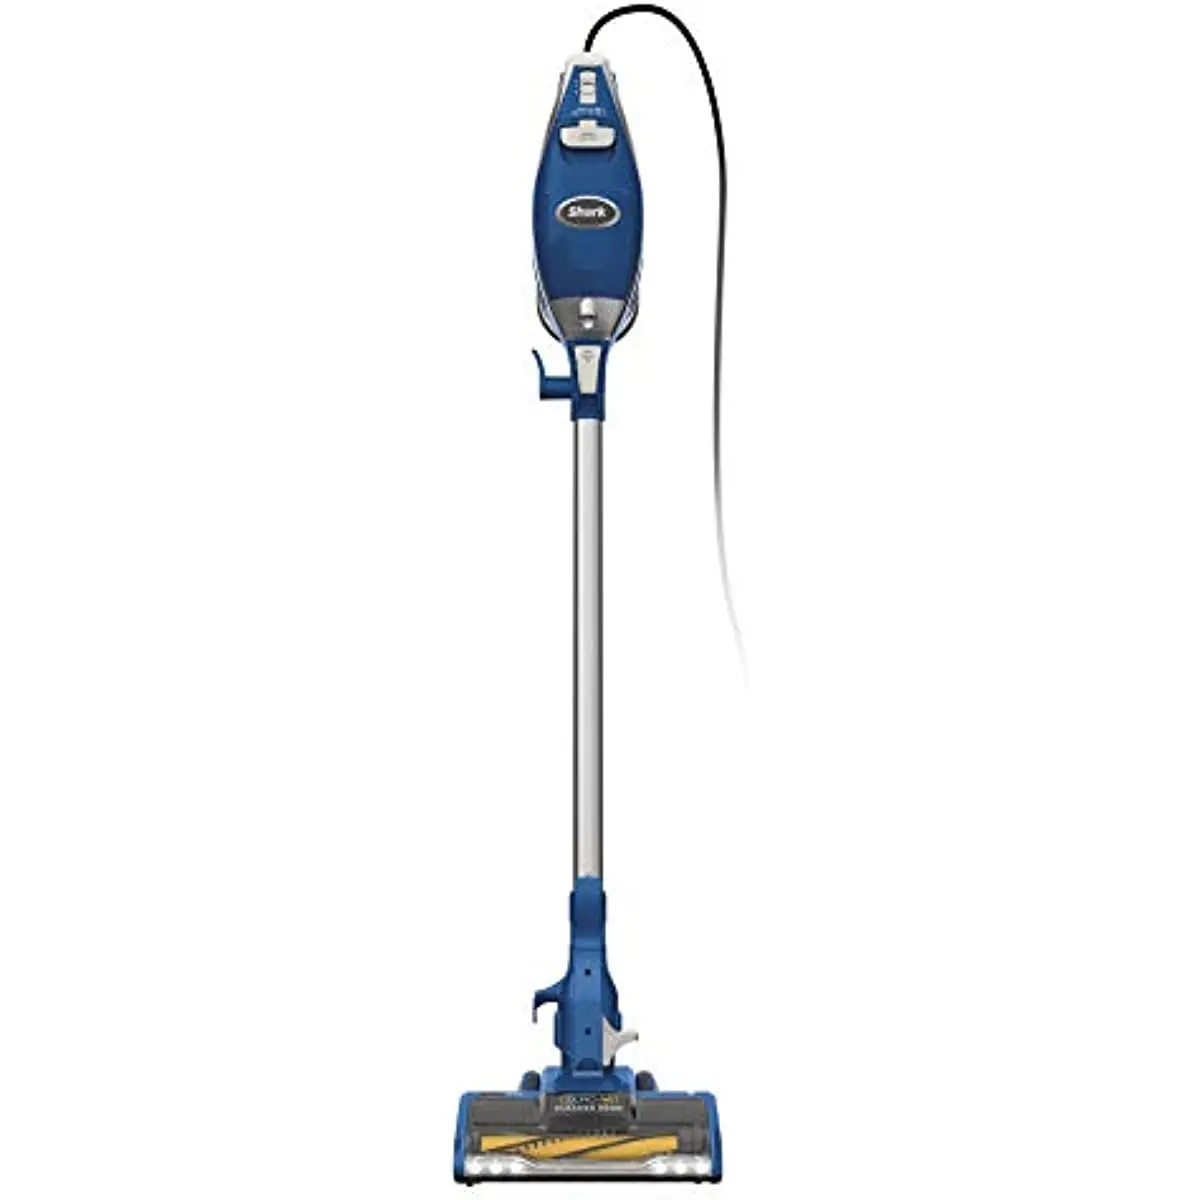 

HV343AMZ Rocket Corded Stick Vacuum with Self-Cleaning Brushroll, Lightweight & Maneuverable,Pet Hair Pickup,Blue/Silver